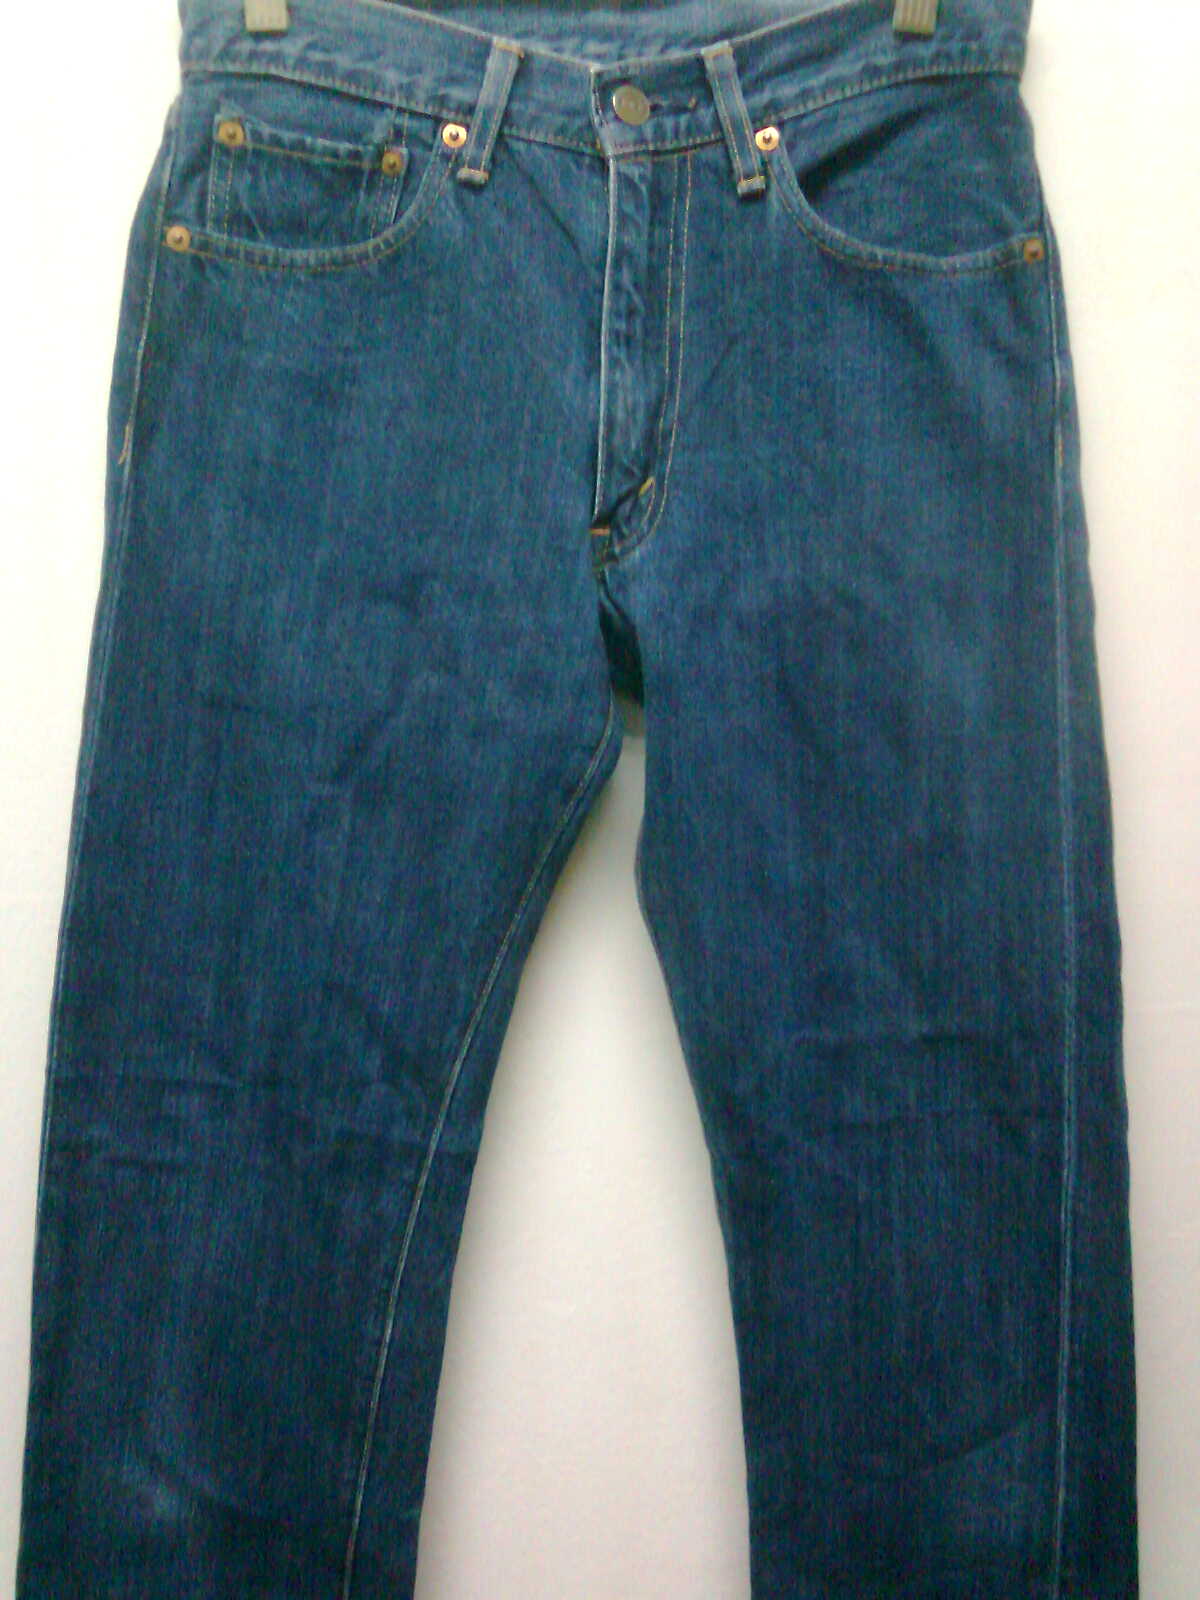 Rakutanstock.Com: LEVIS 505 Red Loop MEN'S Blue Jeans